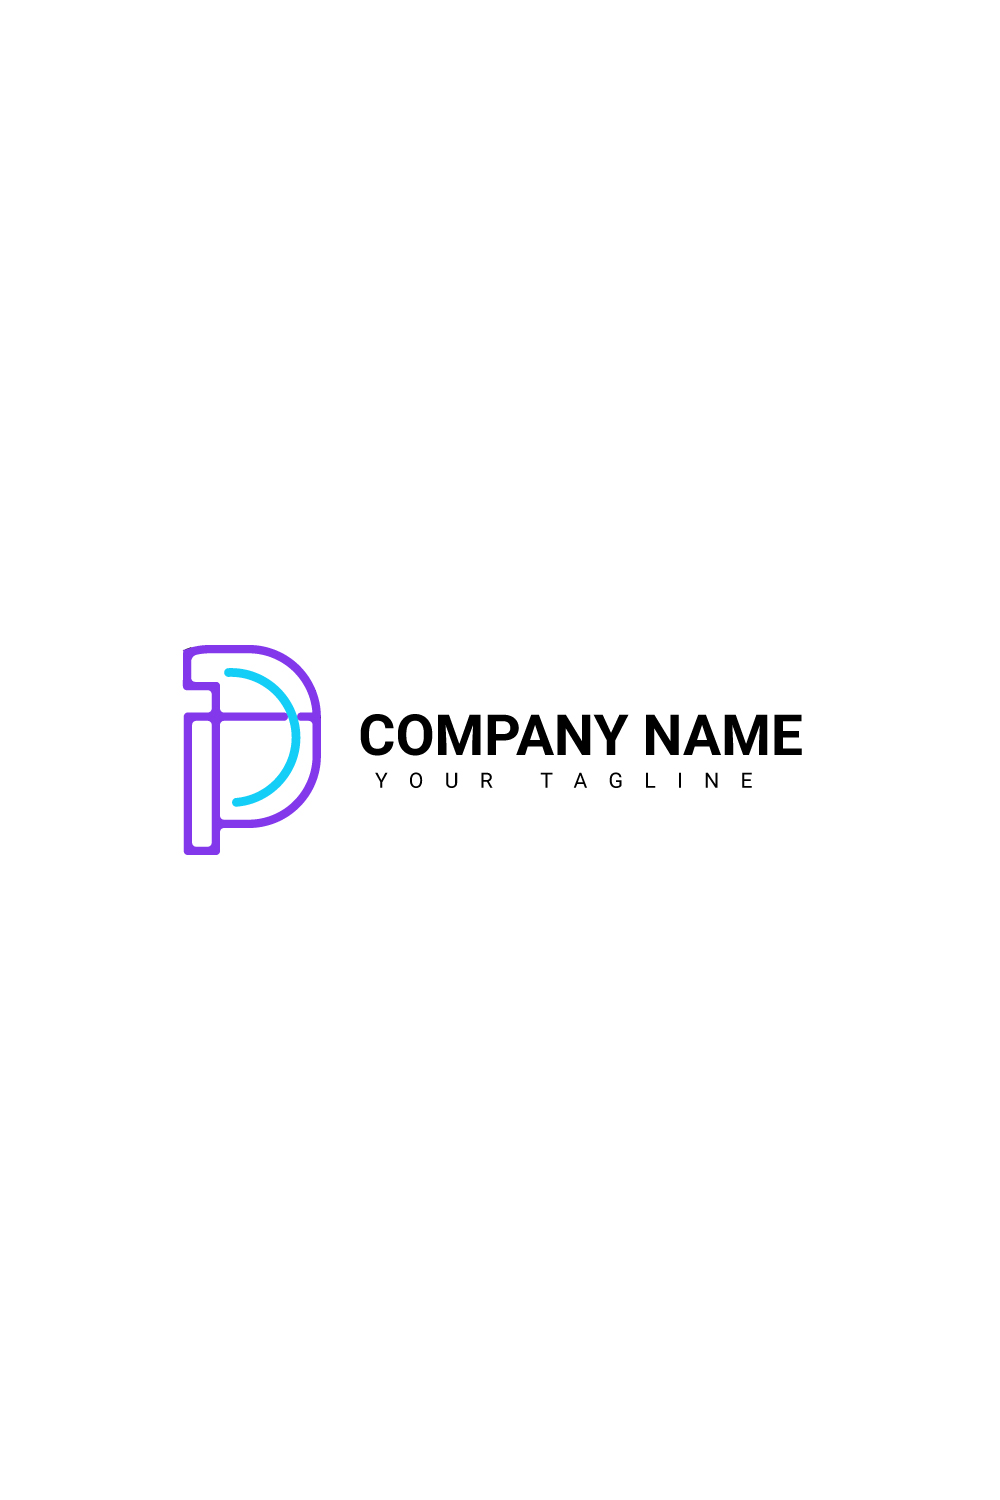 p letter logo pinterest preview image.